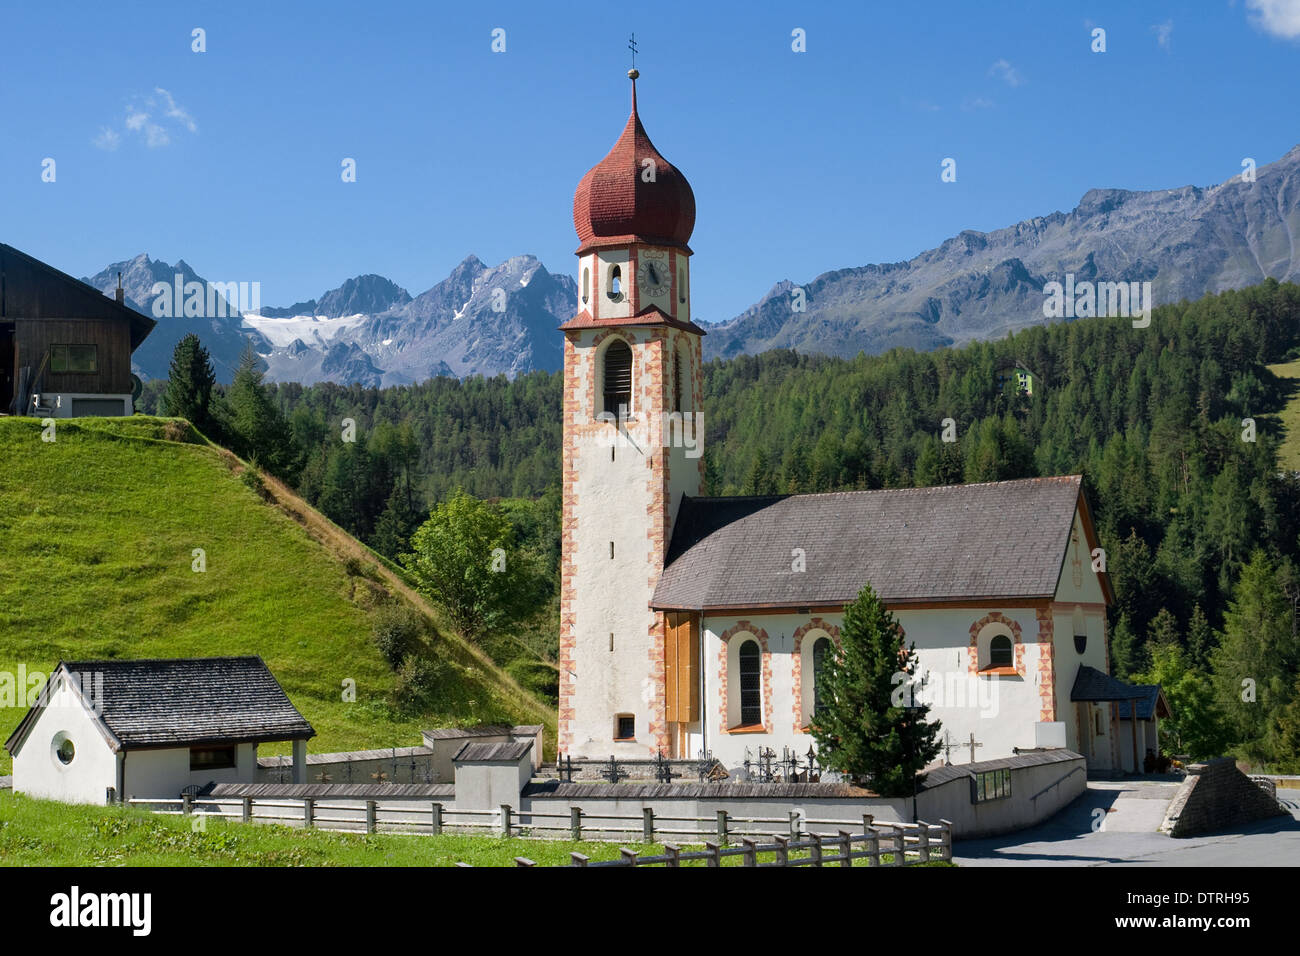 Picturesque church of St Antonius with its onion dome in Niederthai, Otztal Valley, Tirol, Austria. Stock Photo